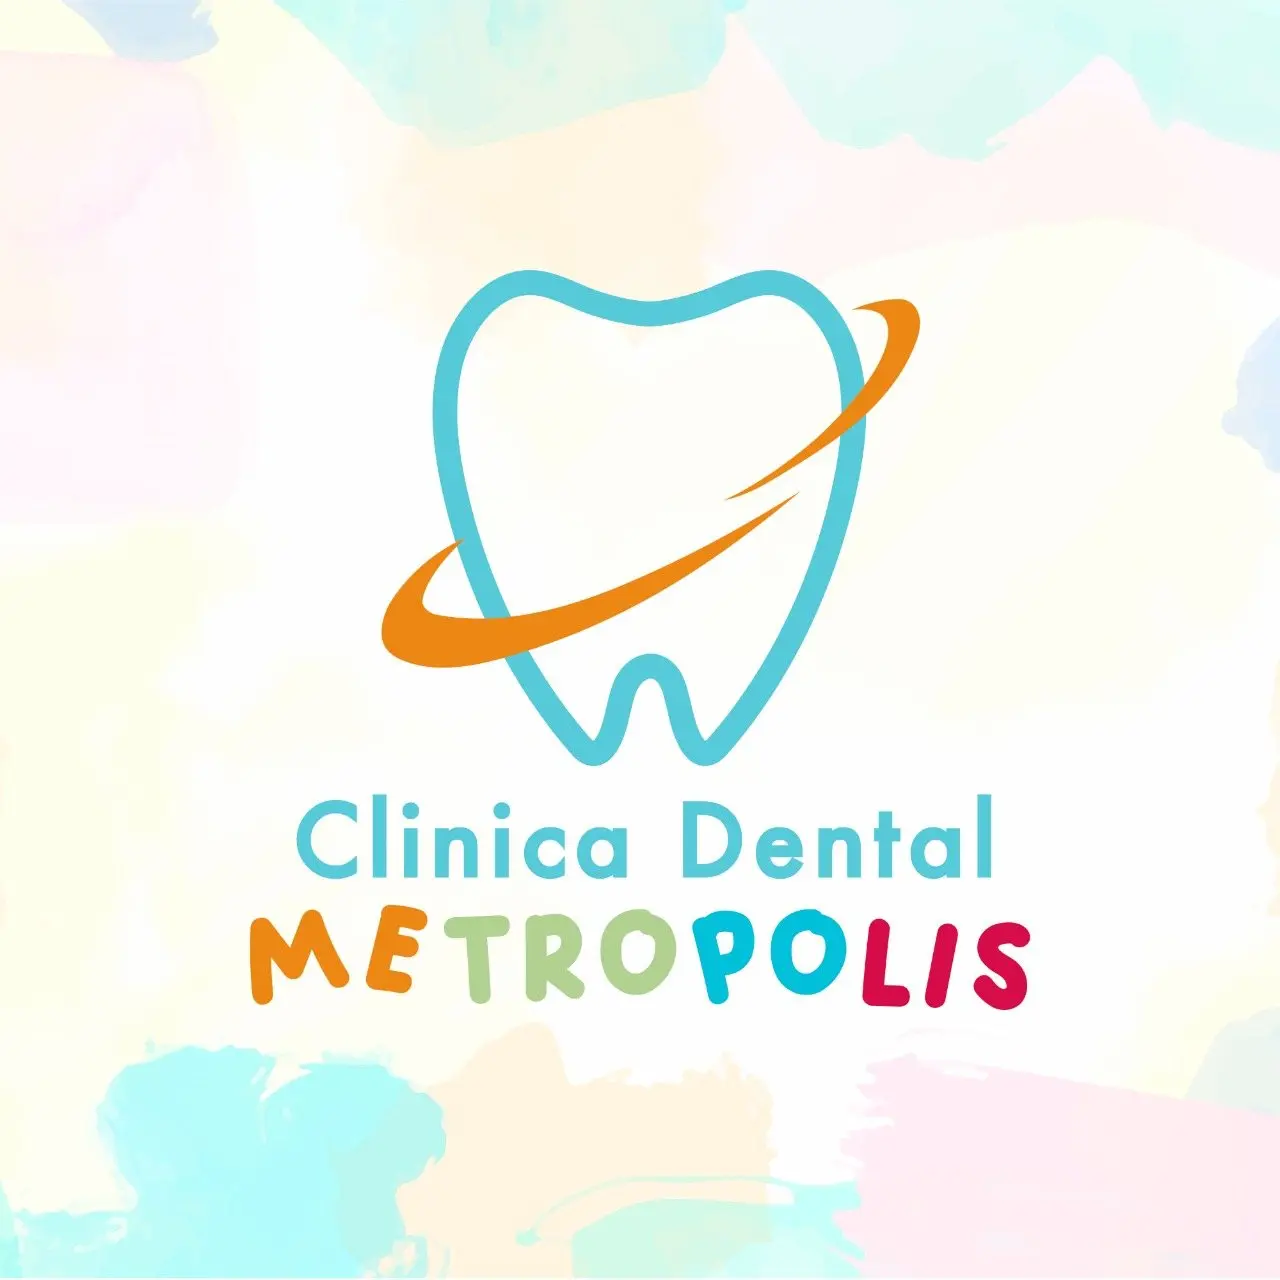 Clínica Dental Metropolis logo